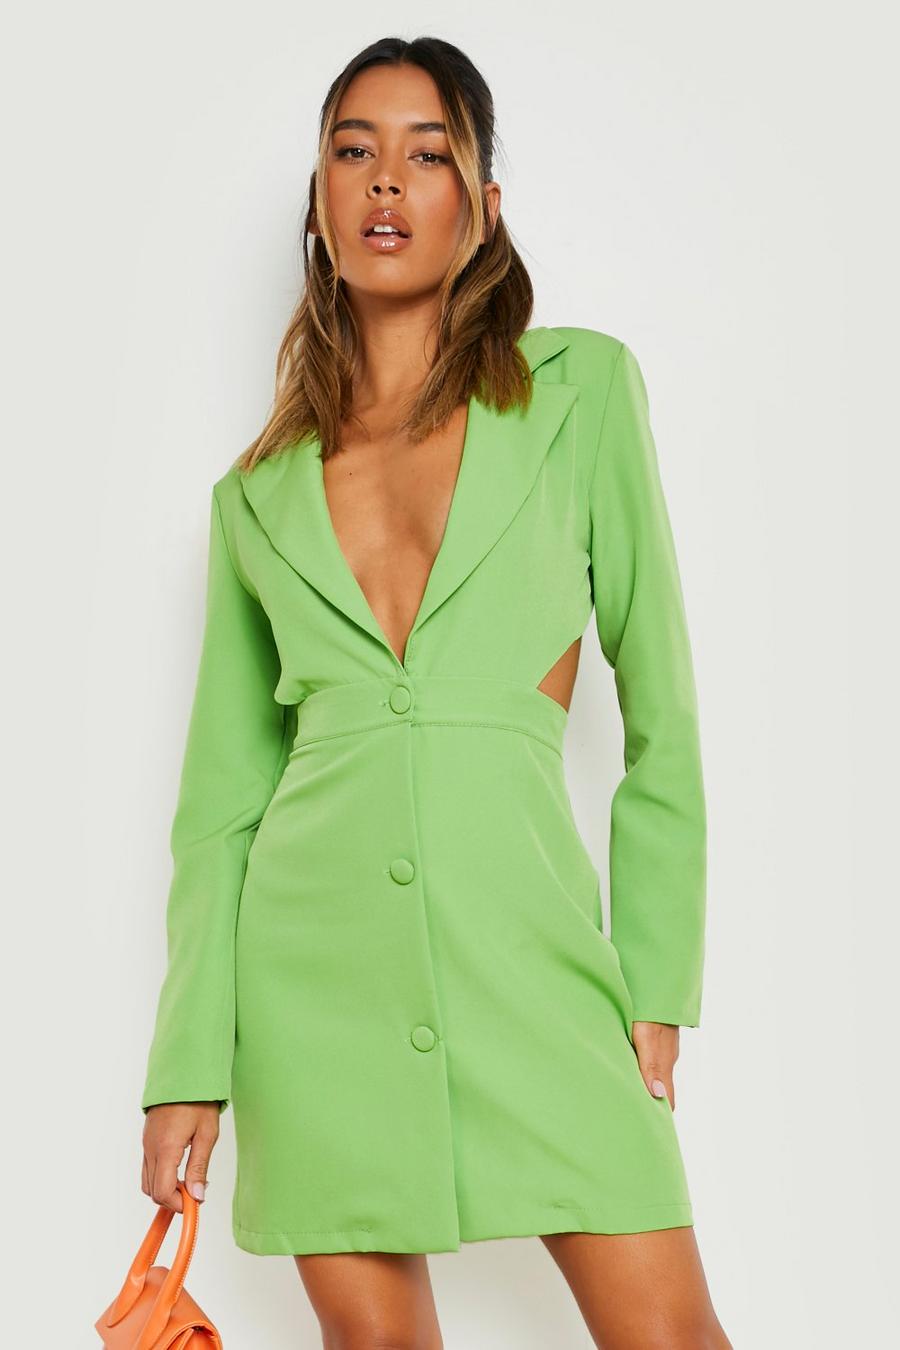 Apple green Cut Out Open Back Tailored Blazer Dress